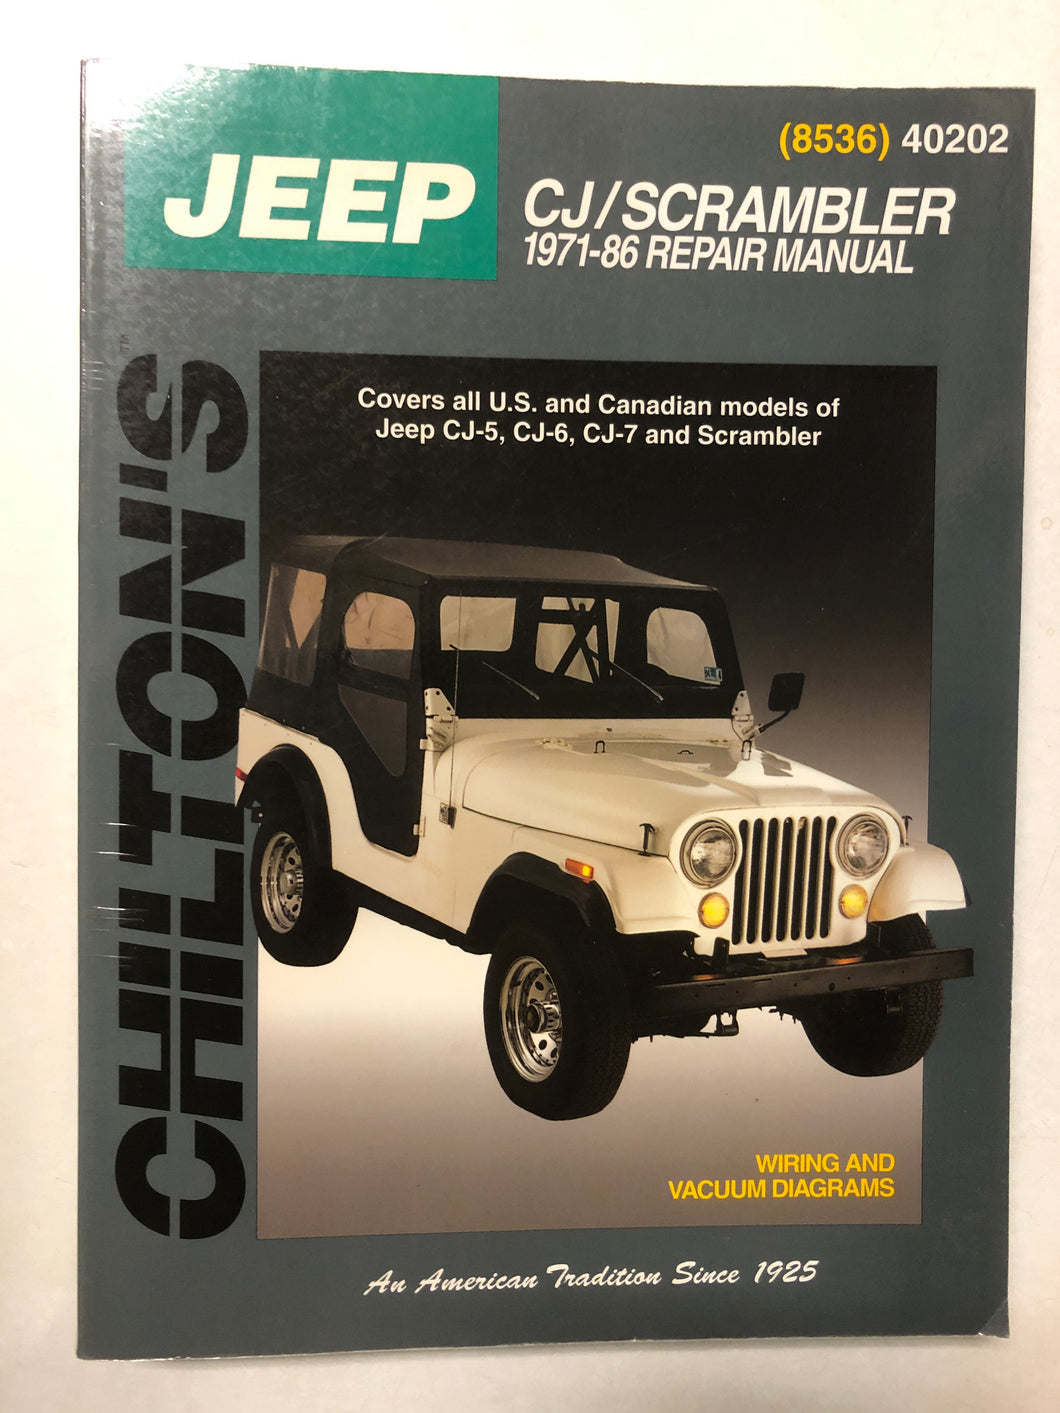 Jeep CJ/Scrambler 1971-86 Repair Manual - Slick Cat Books 